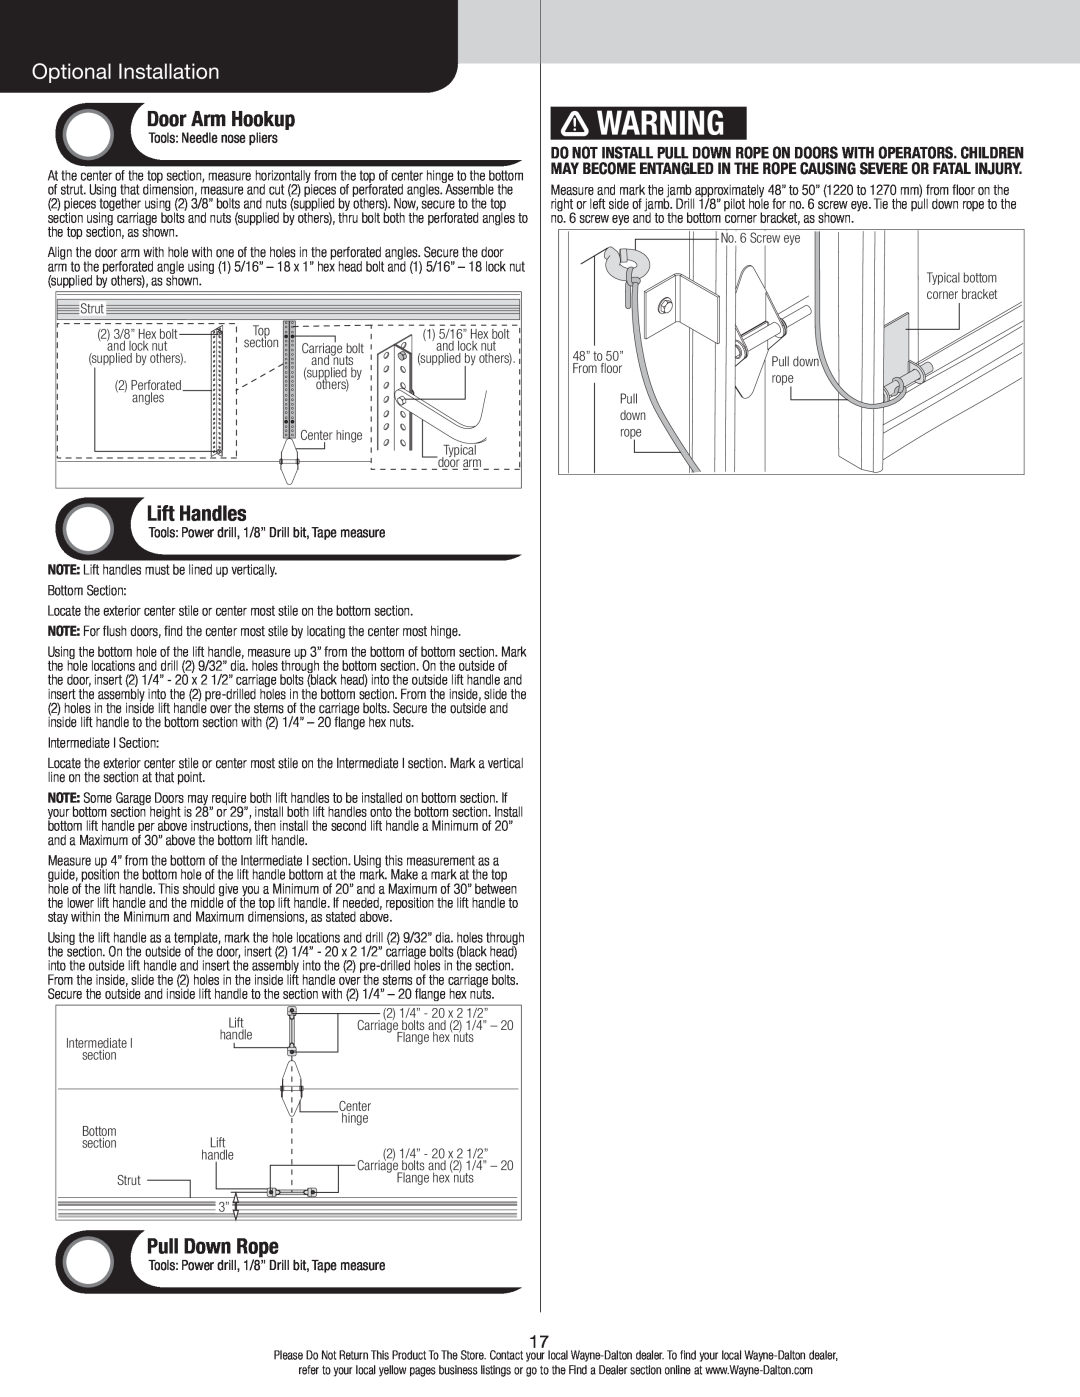 Wayne-Dalton 347610 installation instructions Optional Installation, Door Arm Hookup, Lift Handles, Pull Down Rope 